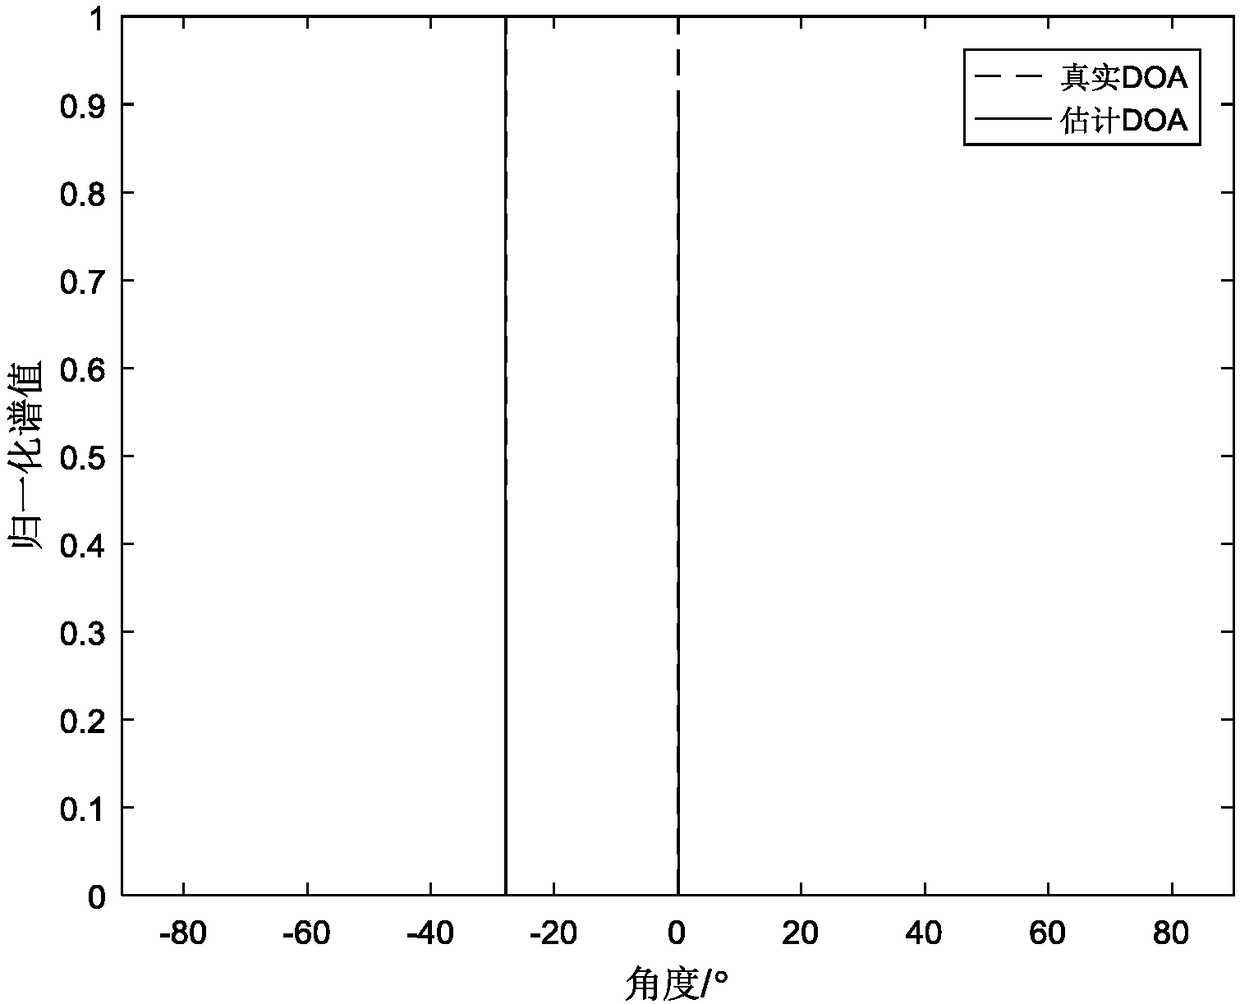 Co-primer array non-grid DOA estimation method under non-negative sparse Bayes learning framework